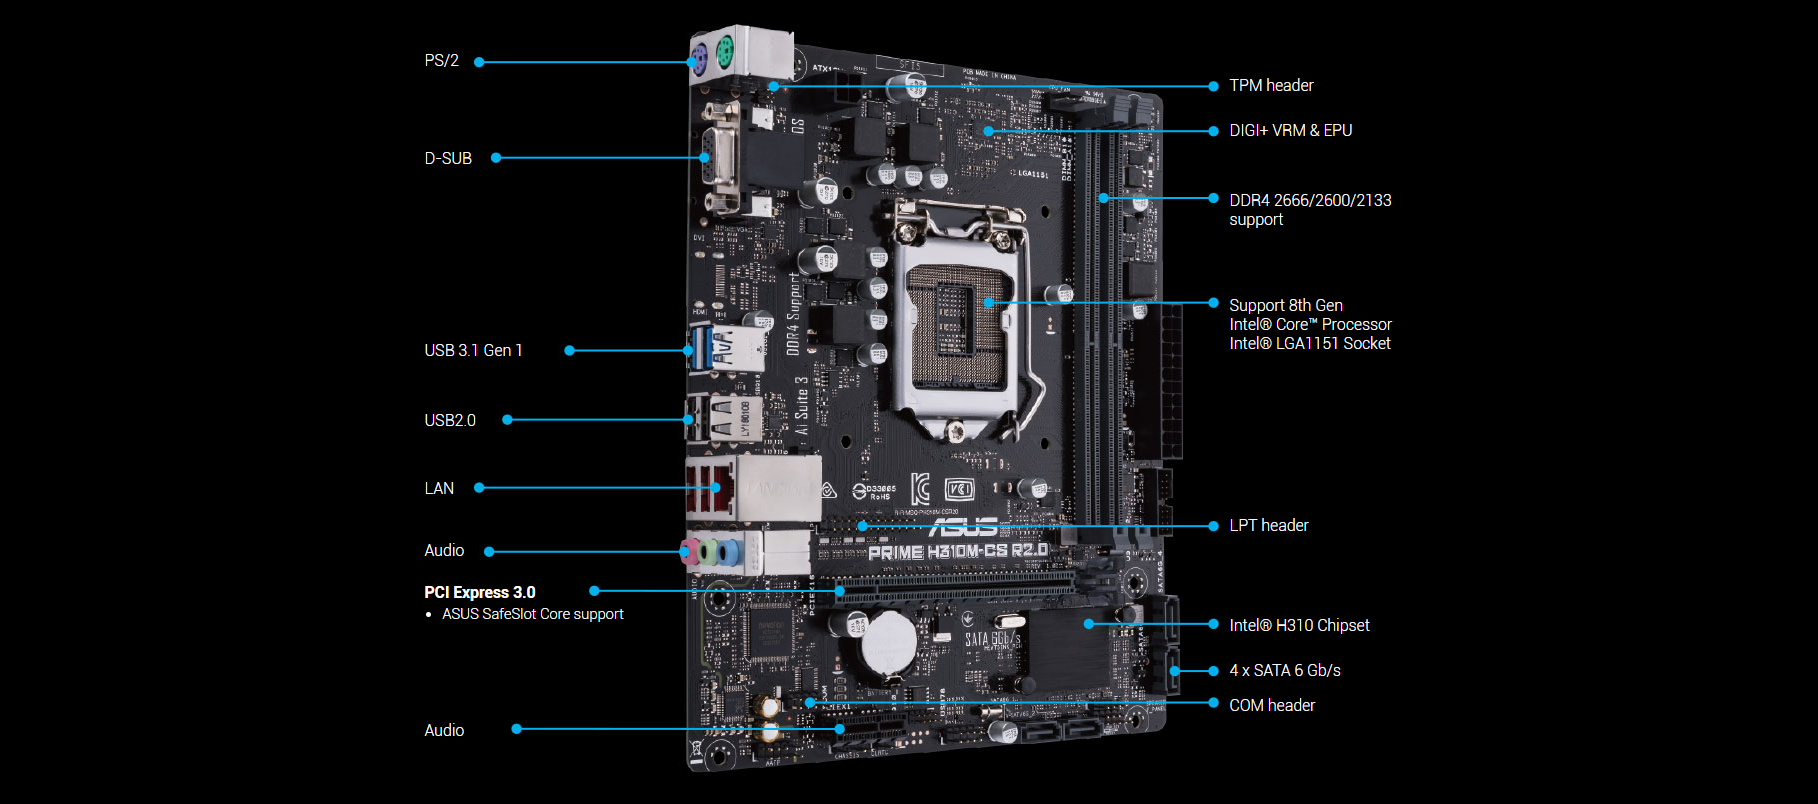 Mainboard ASUS H310M PRIME H310M-CS R2.0 (Intel H310 , Socket 1151, m-ATX, 2 khe RAM DDR4)